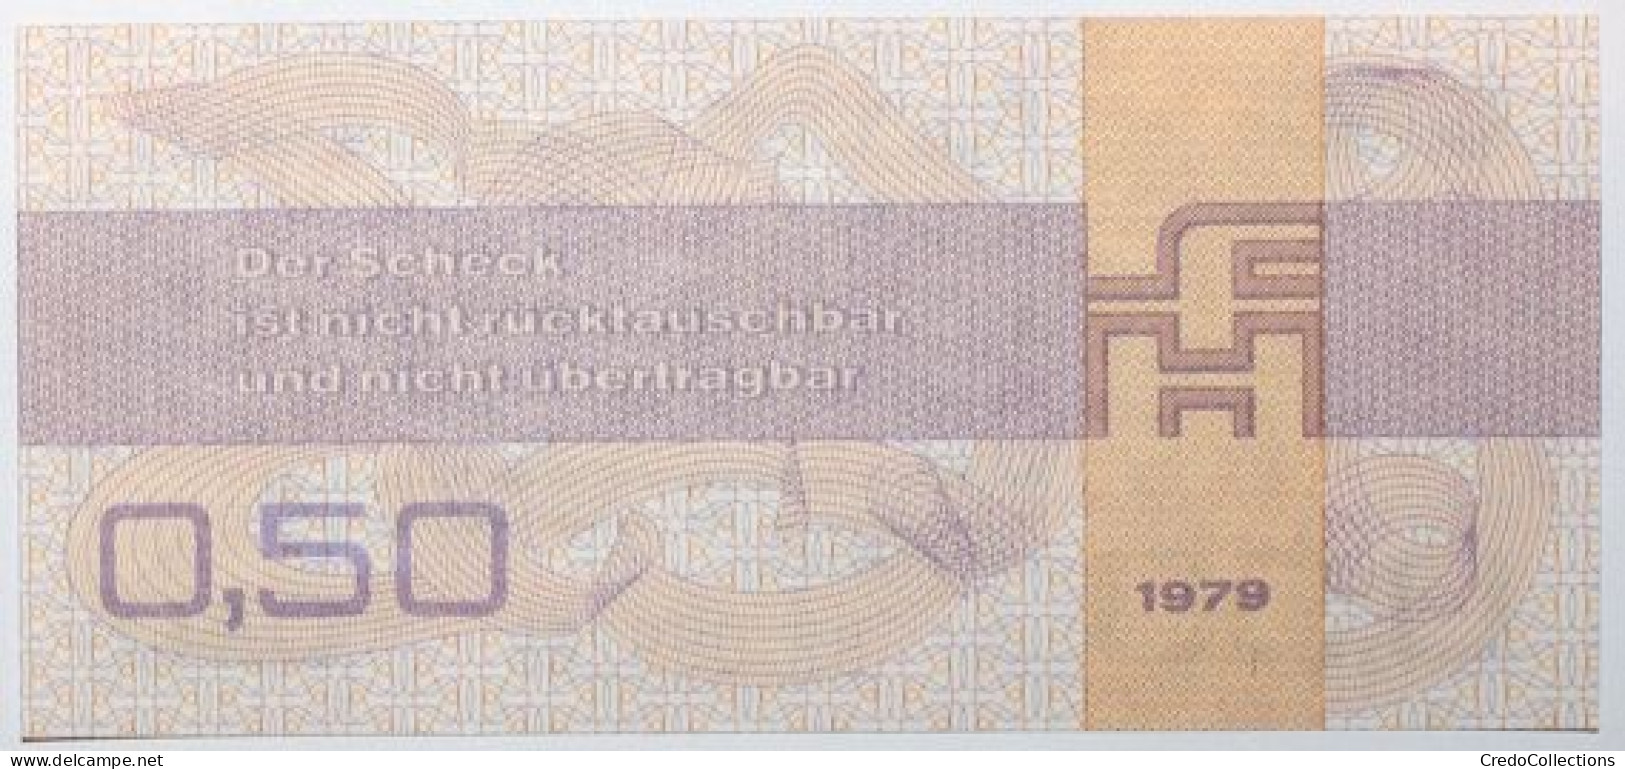 Allemagne De L'Est - 50 Pfennig - 1979 - PICK FX1 - NEUF - [14] Forum-Aussenhandelsgesellschaft MBH